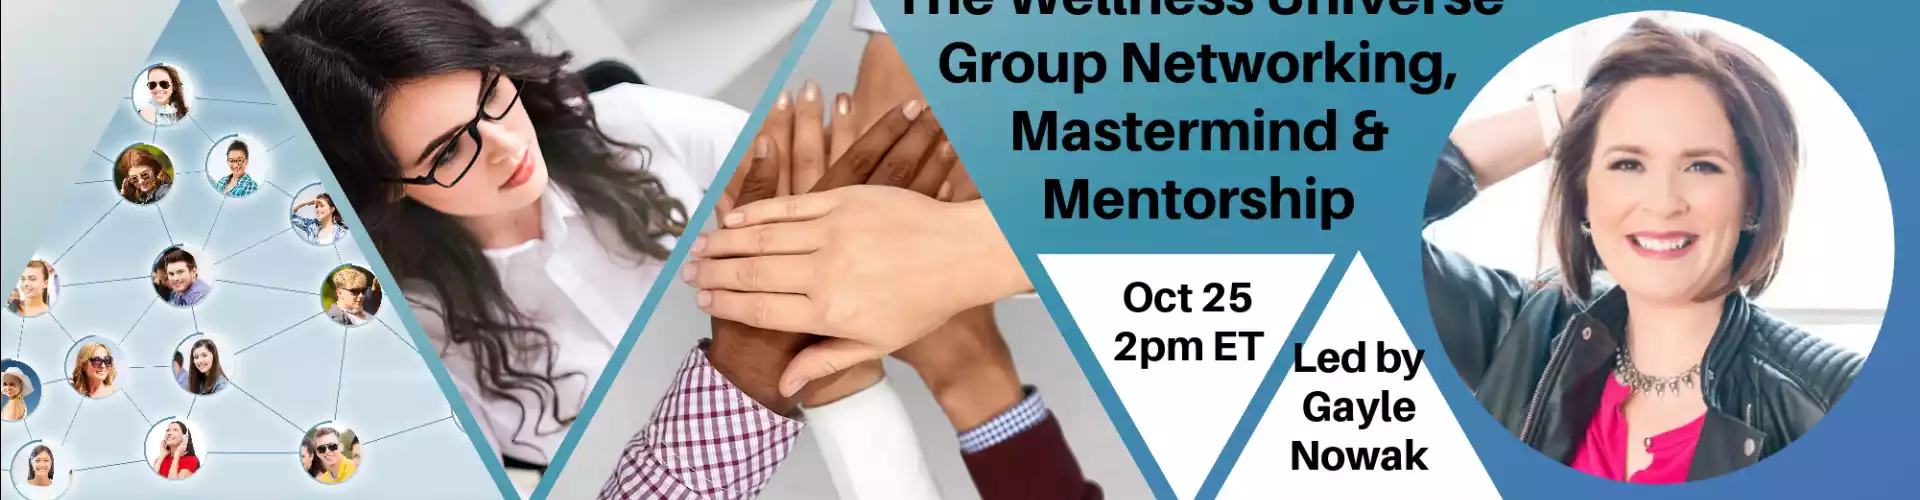  WU Group Networking, Mastermind & Mentorship w Gayle Nowak